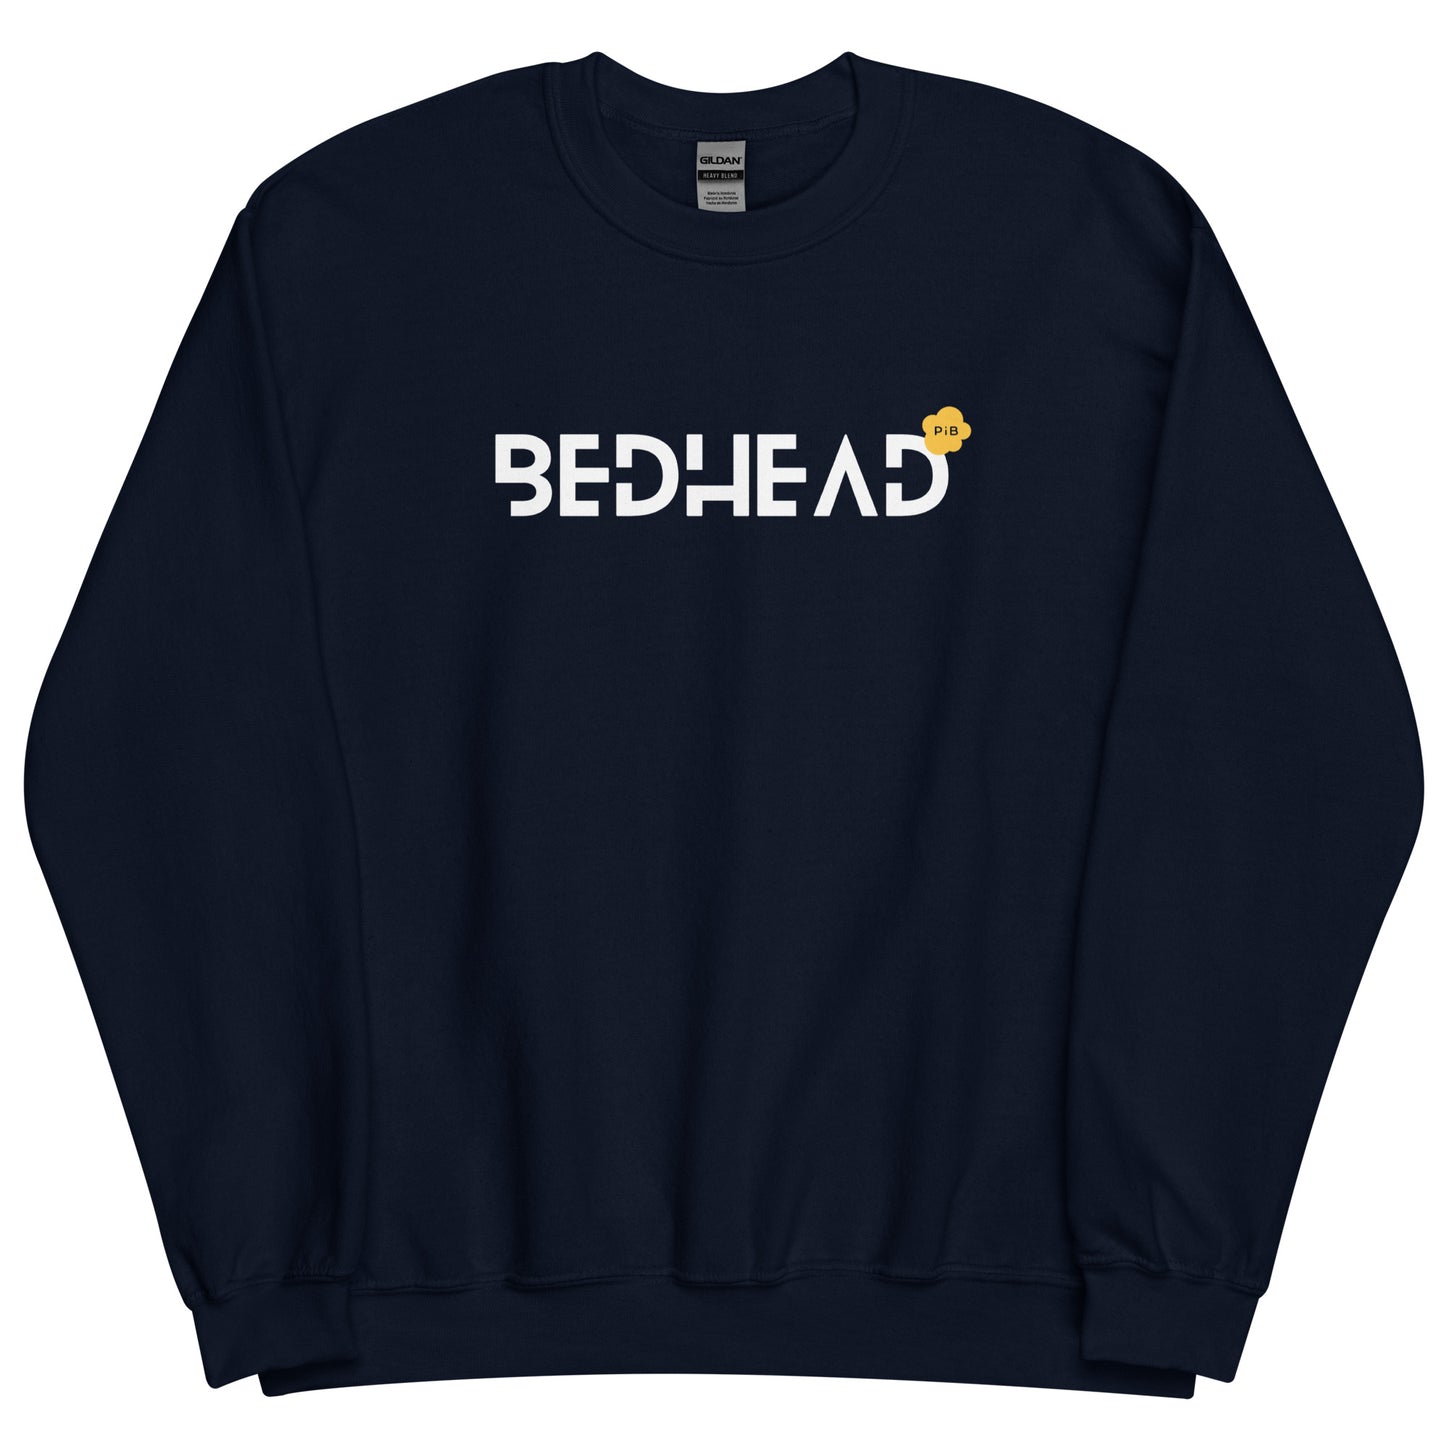 BEDHEAD WHITE TEXT Unisex Sweatshirt